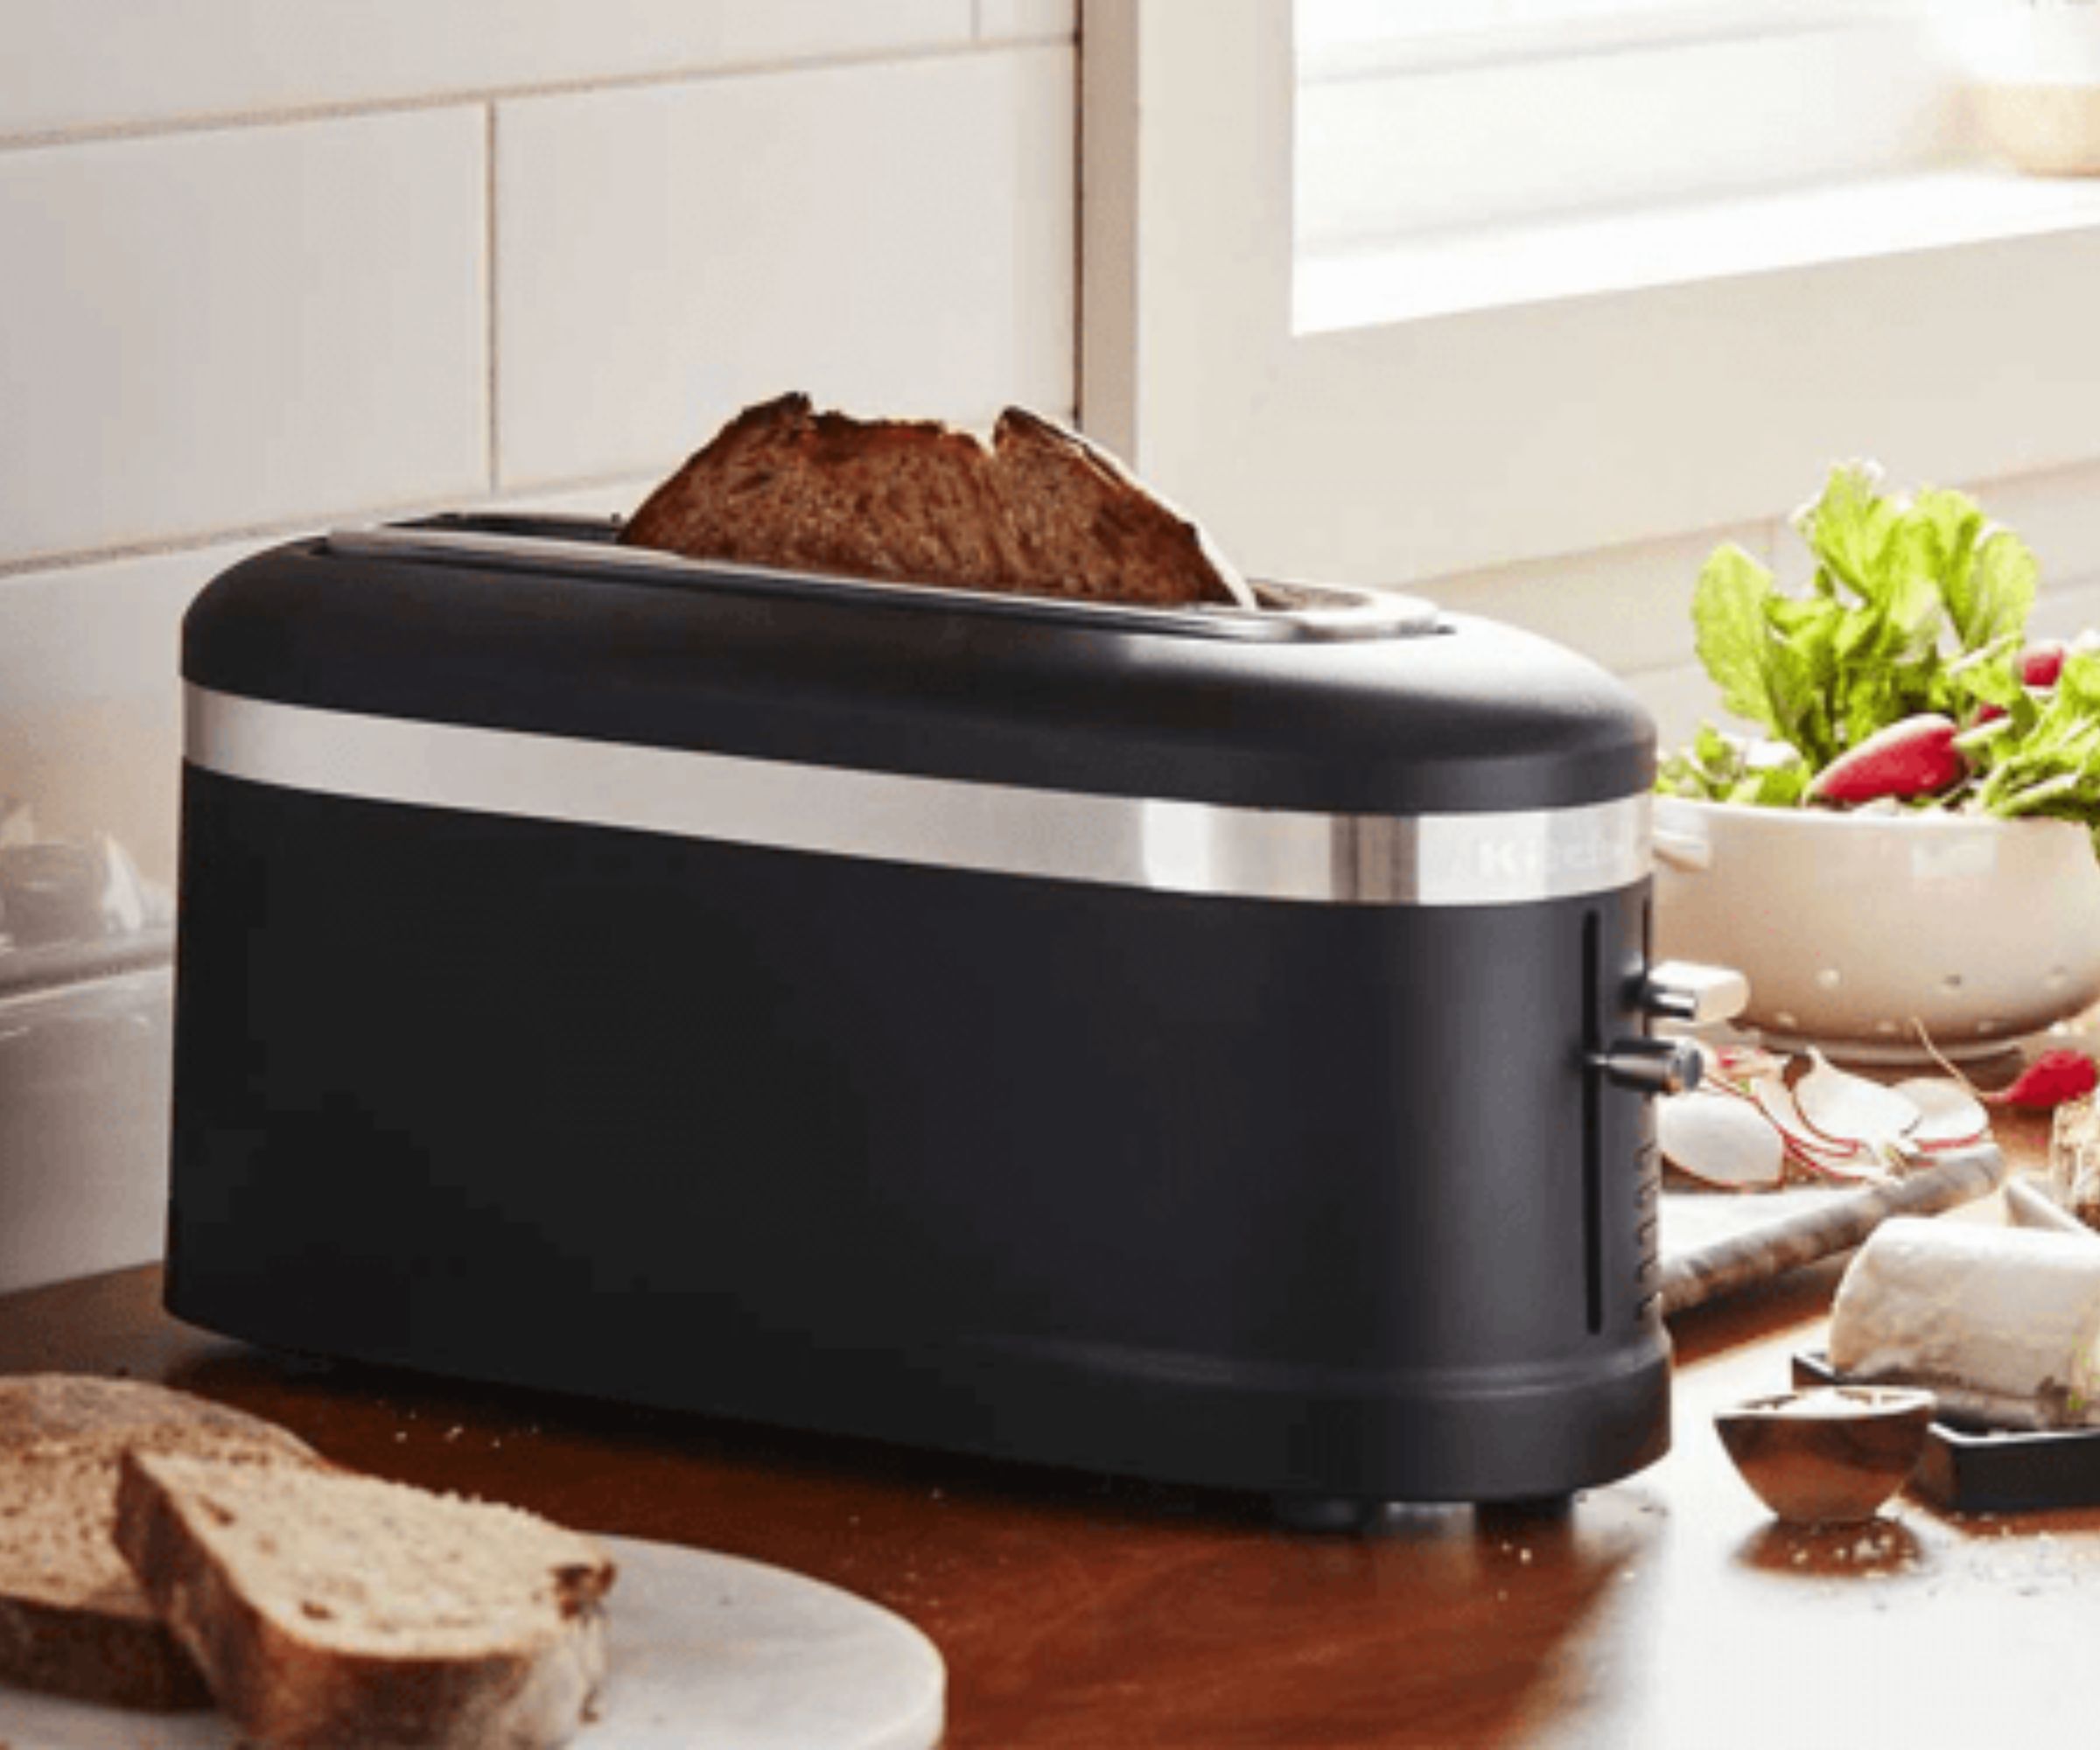 Black KitchenAid toaster on a countertop